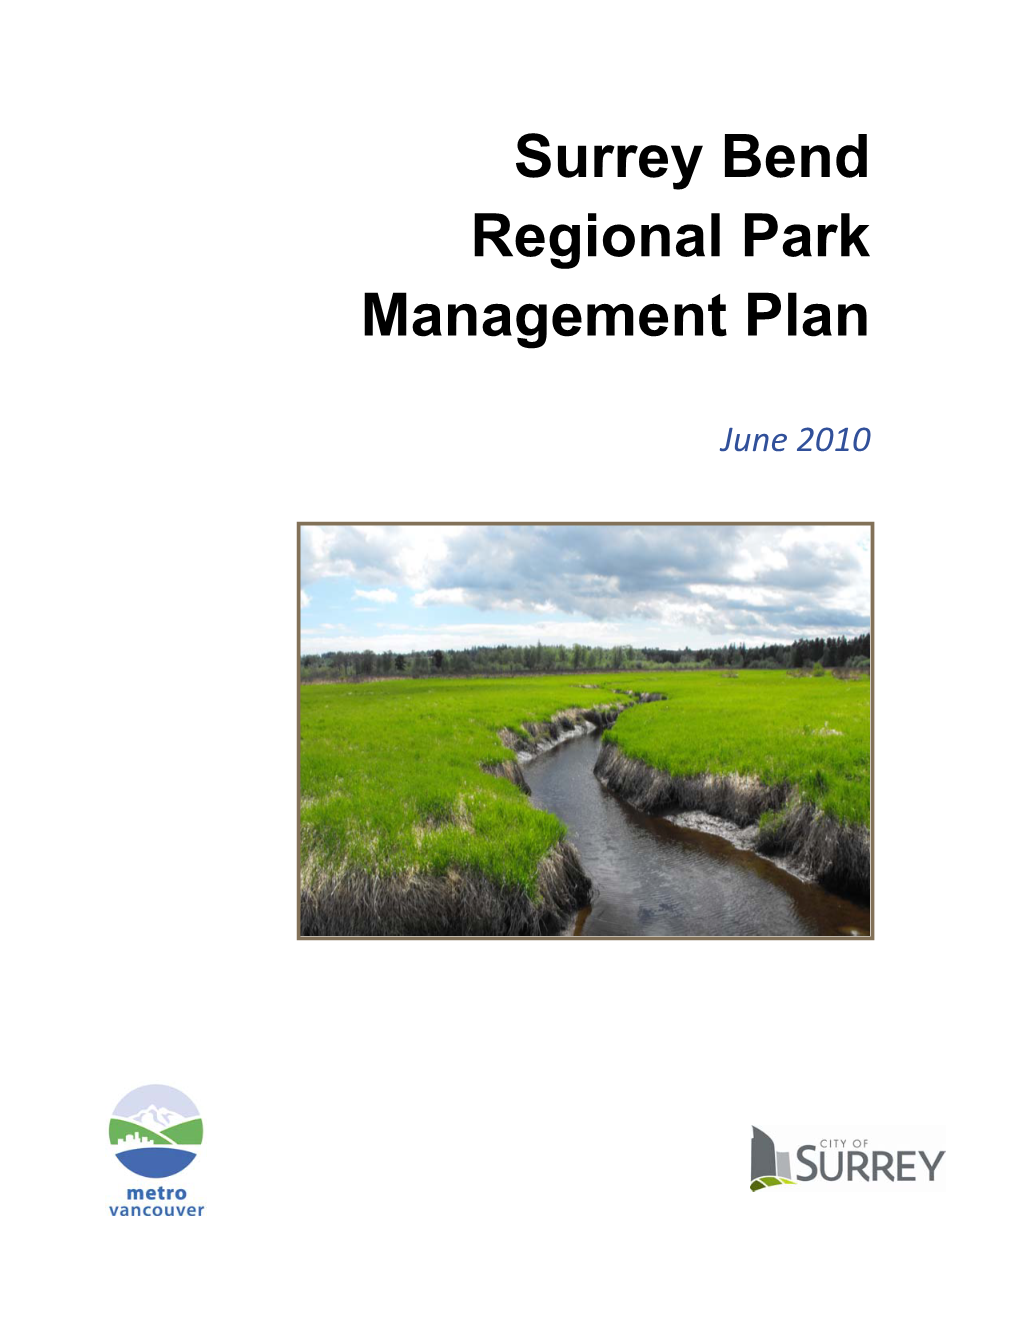 Surrey Bend Regional Park Management Plan